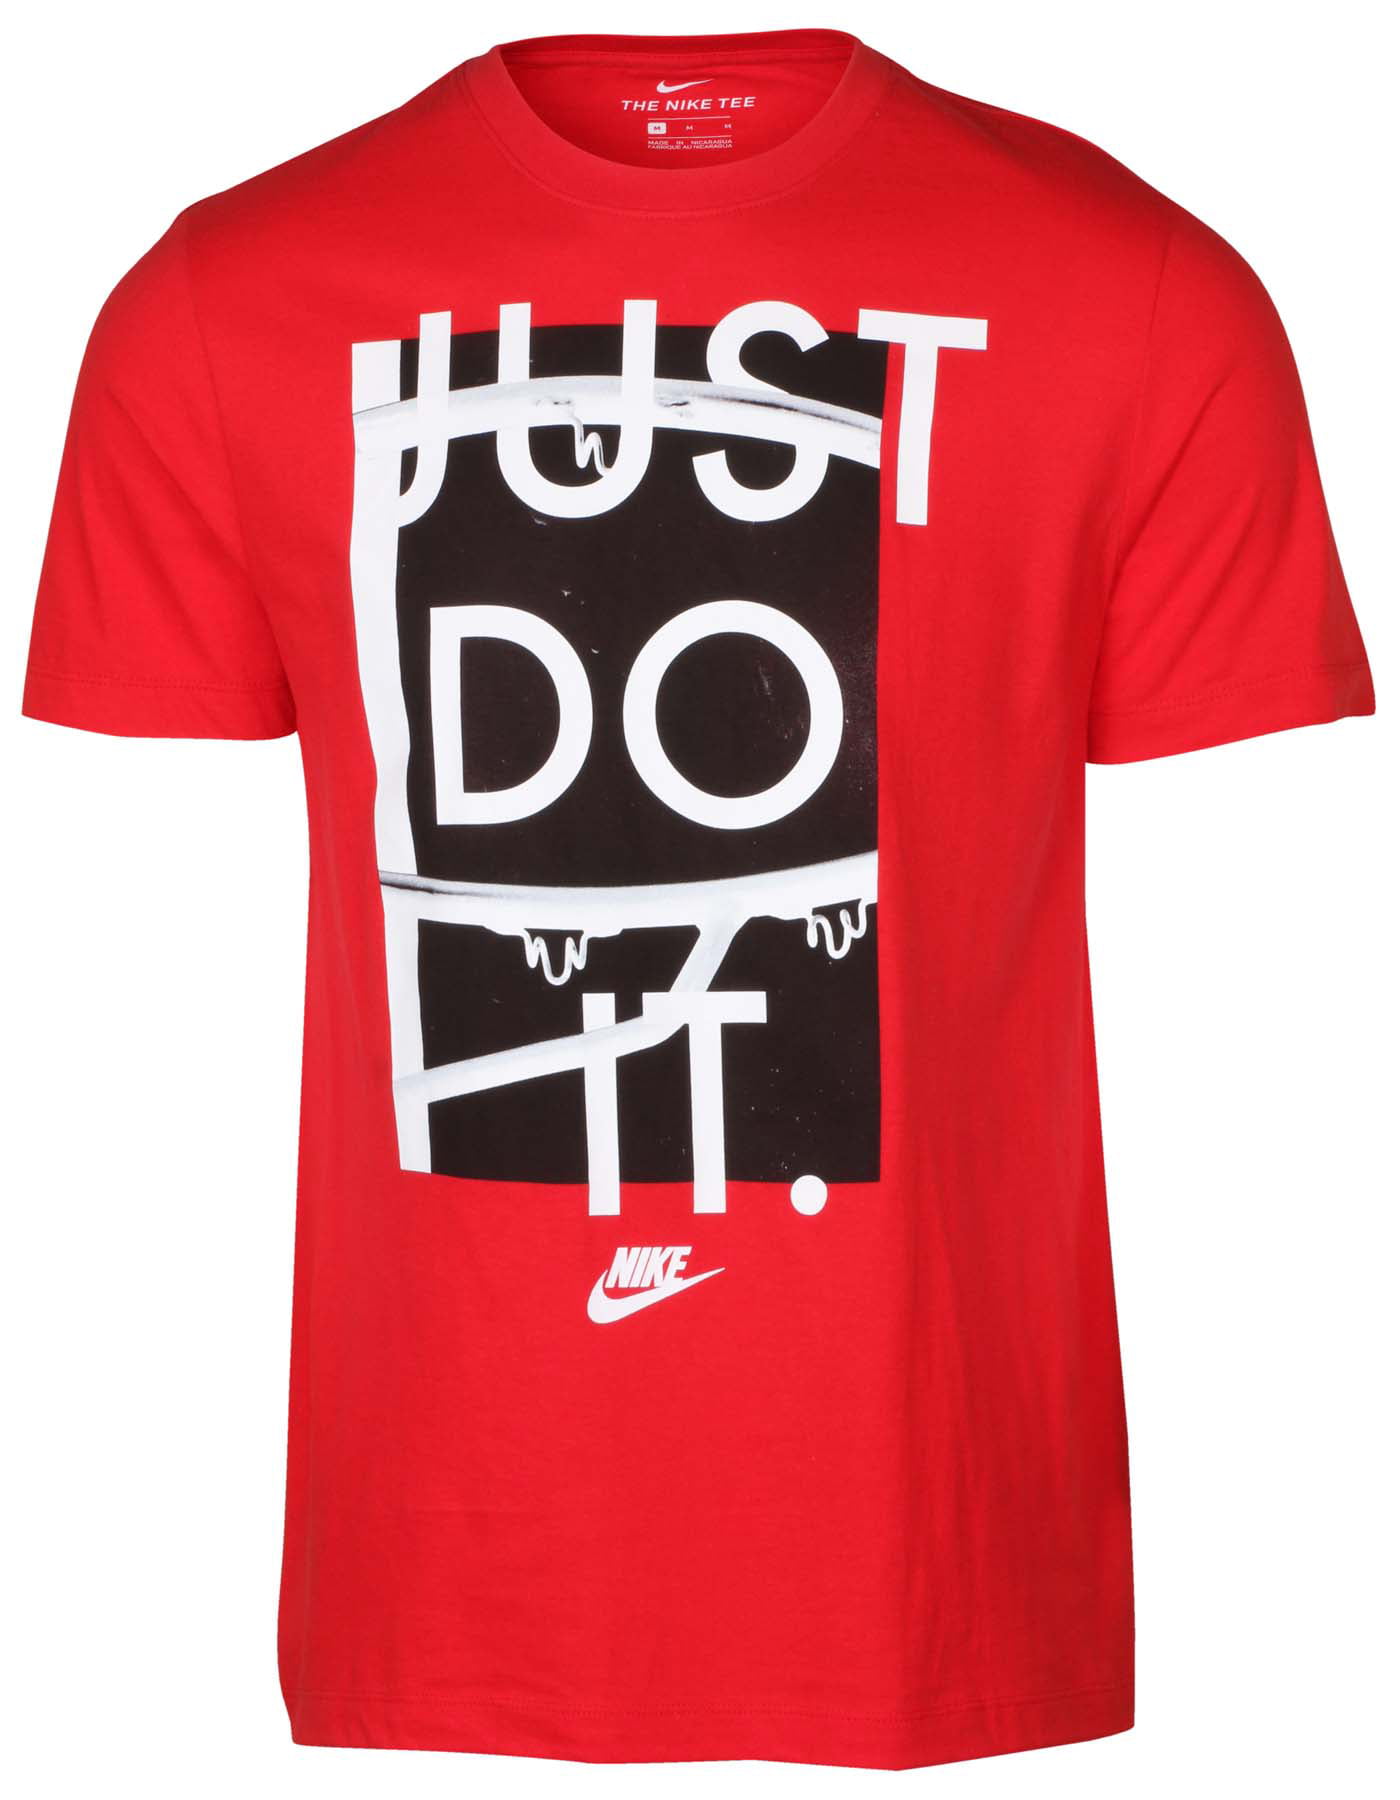 Nike - Nike Men's Just Do It Basketball Rim Graphic Tee (Large ...